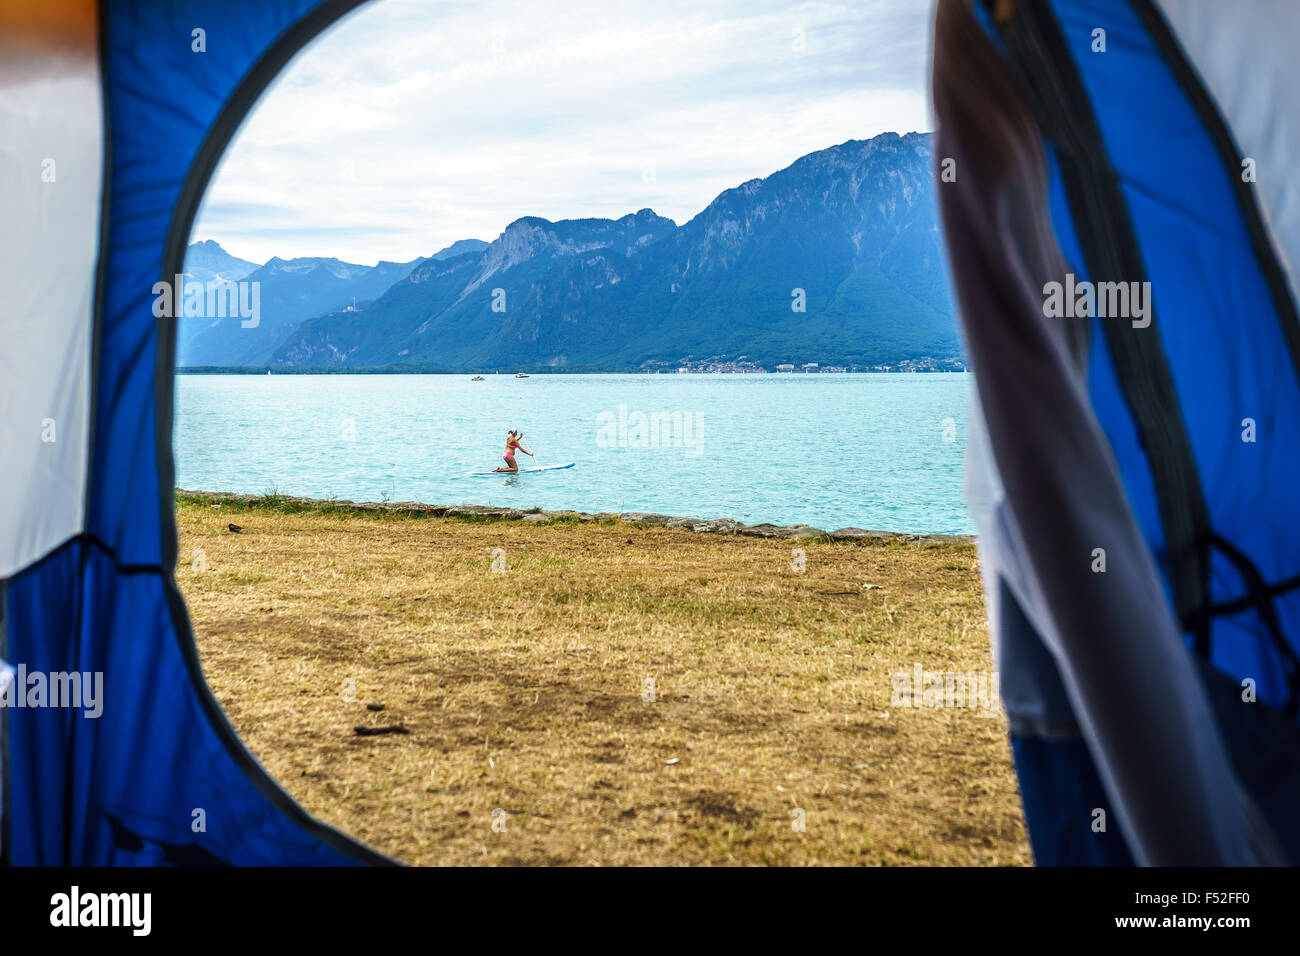 Looking through the tent to the paddleboarder. Lake Geneva, Switzerland. Stock Photo